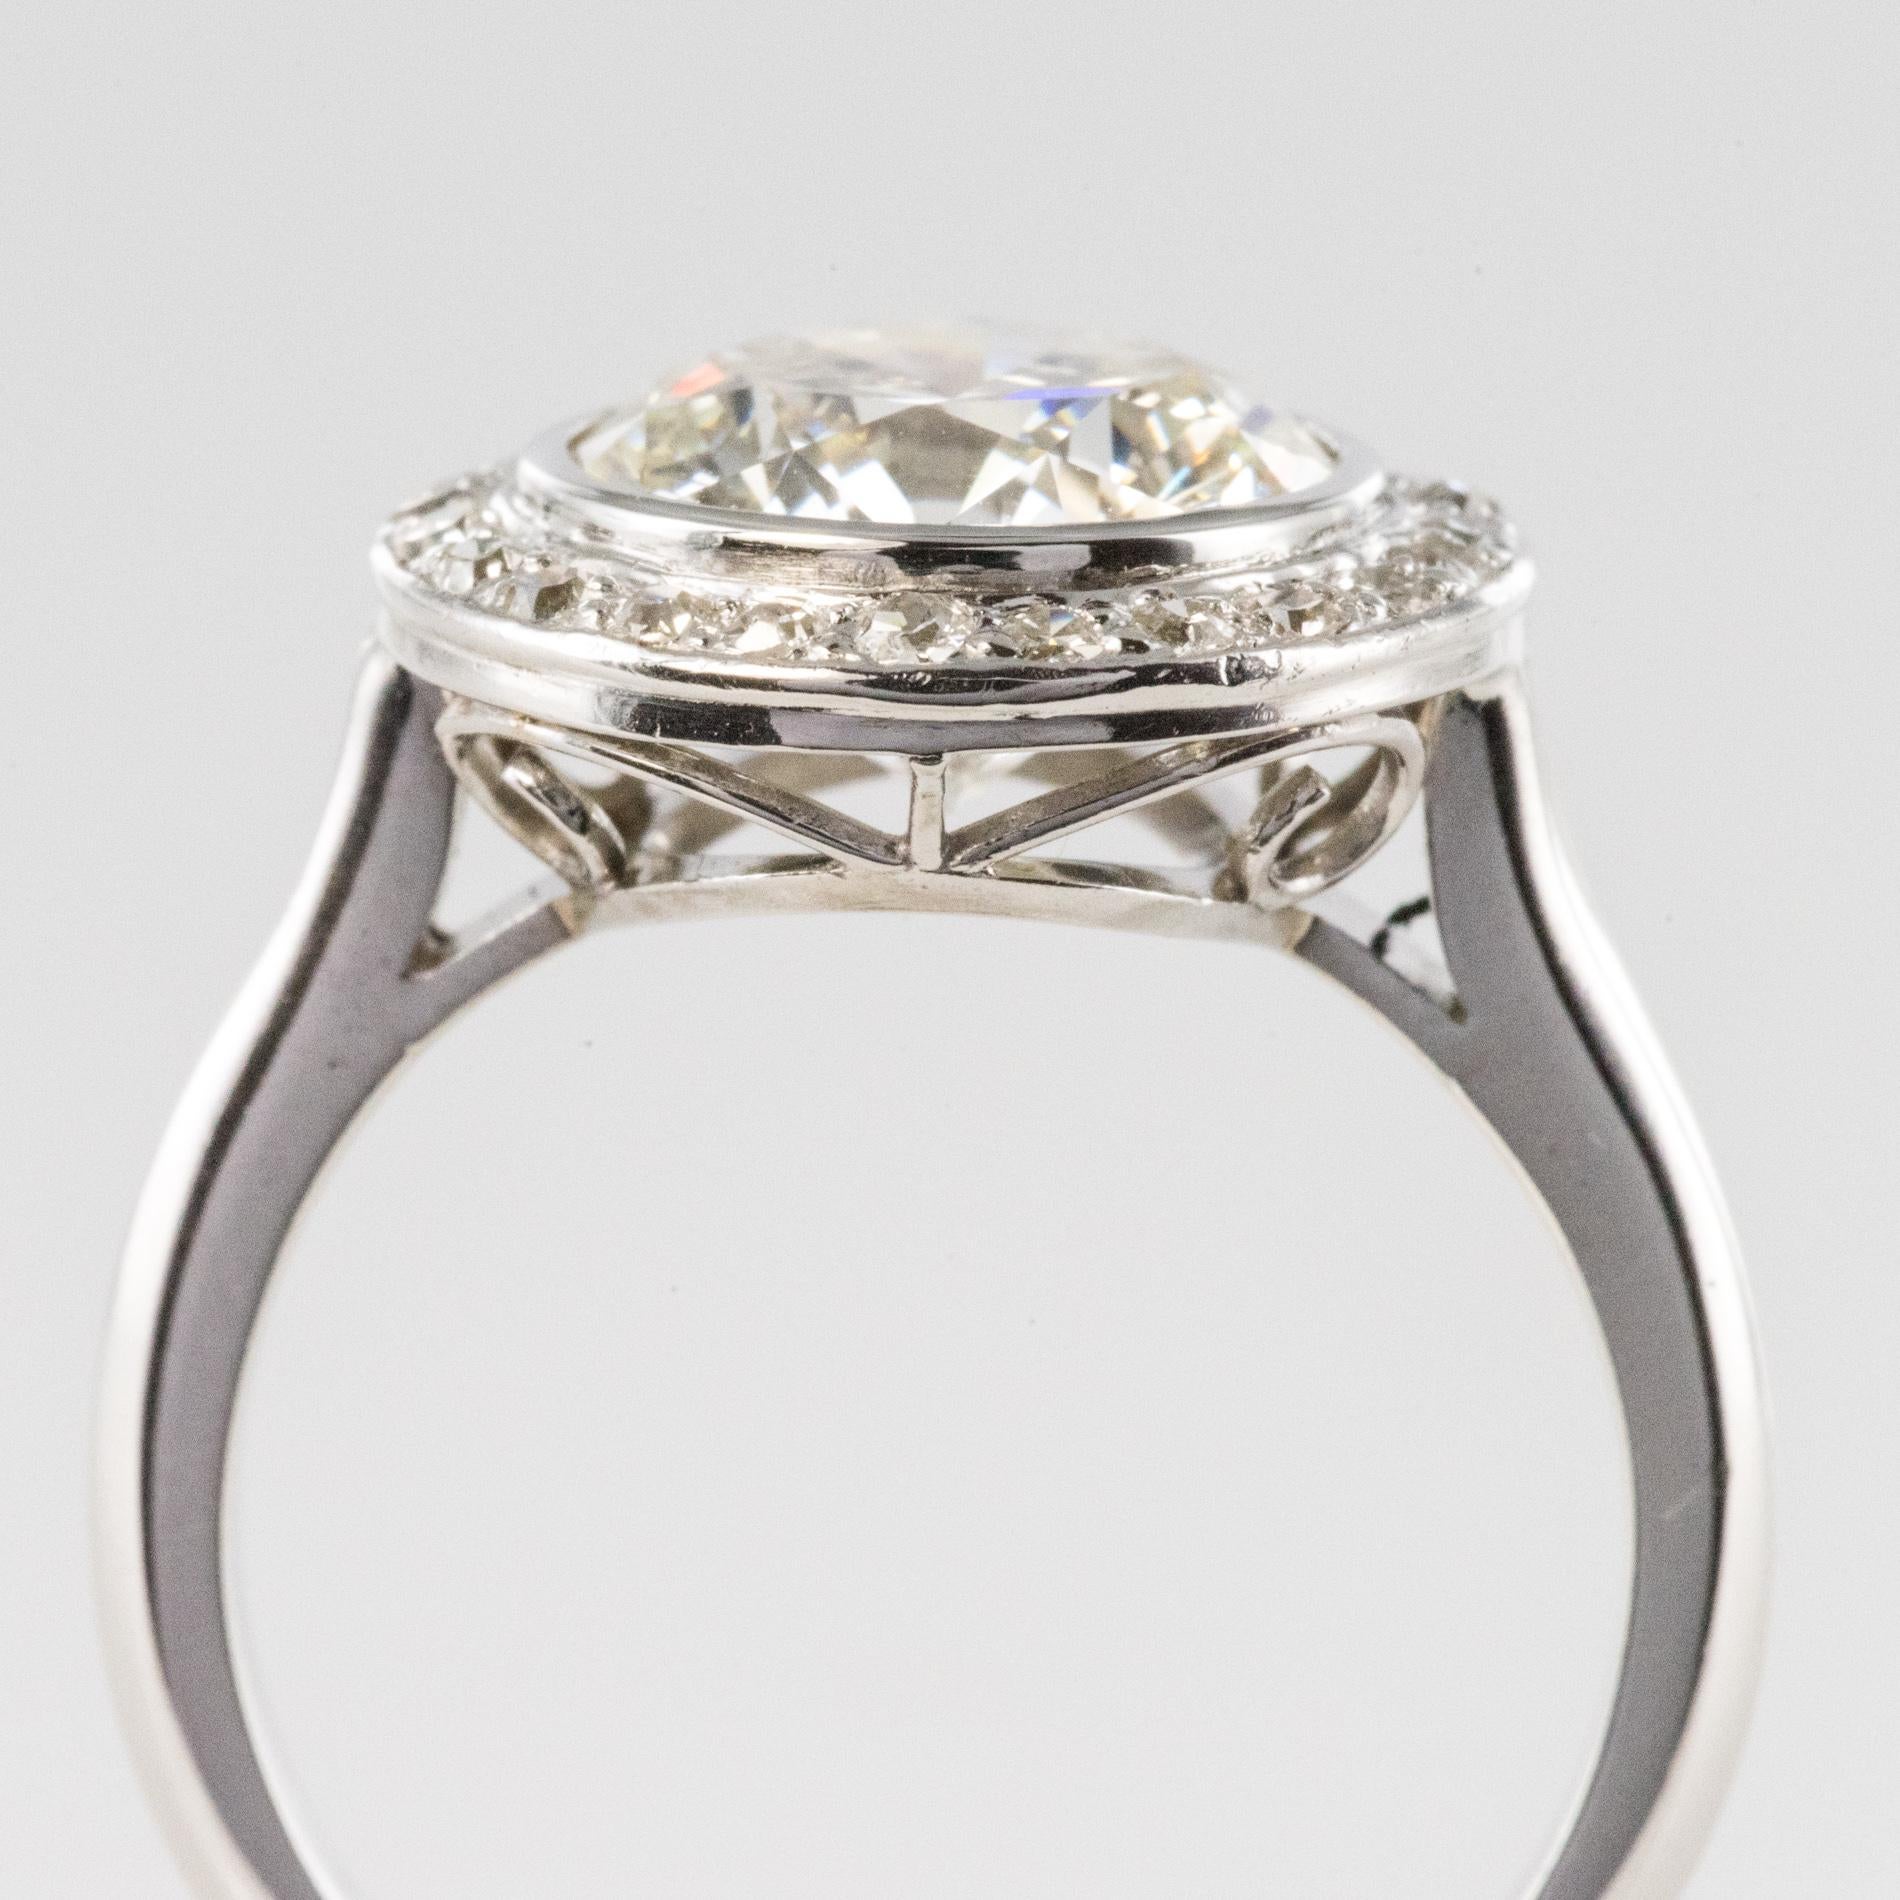 French 1930s Art Deco 18 Karat White Gold 3.84 Carat Diamond Ring For Sale 4